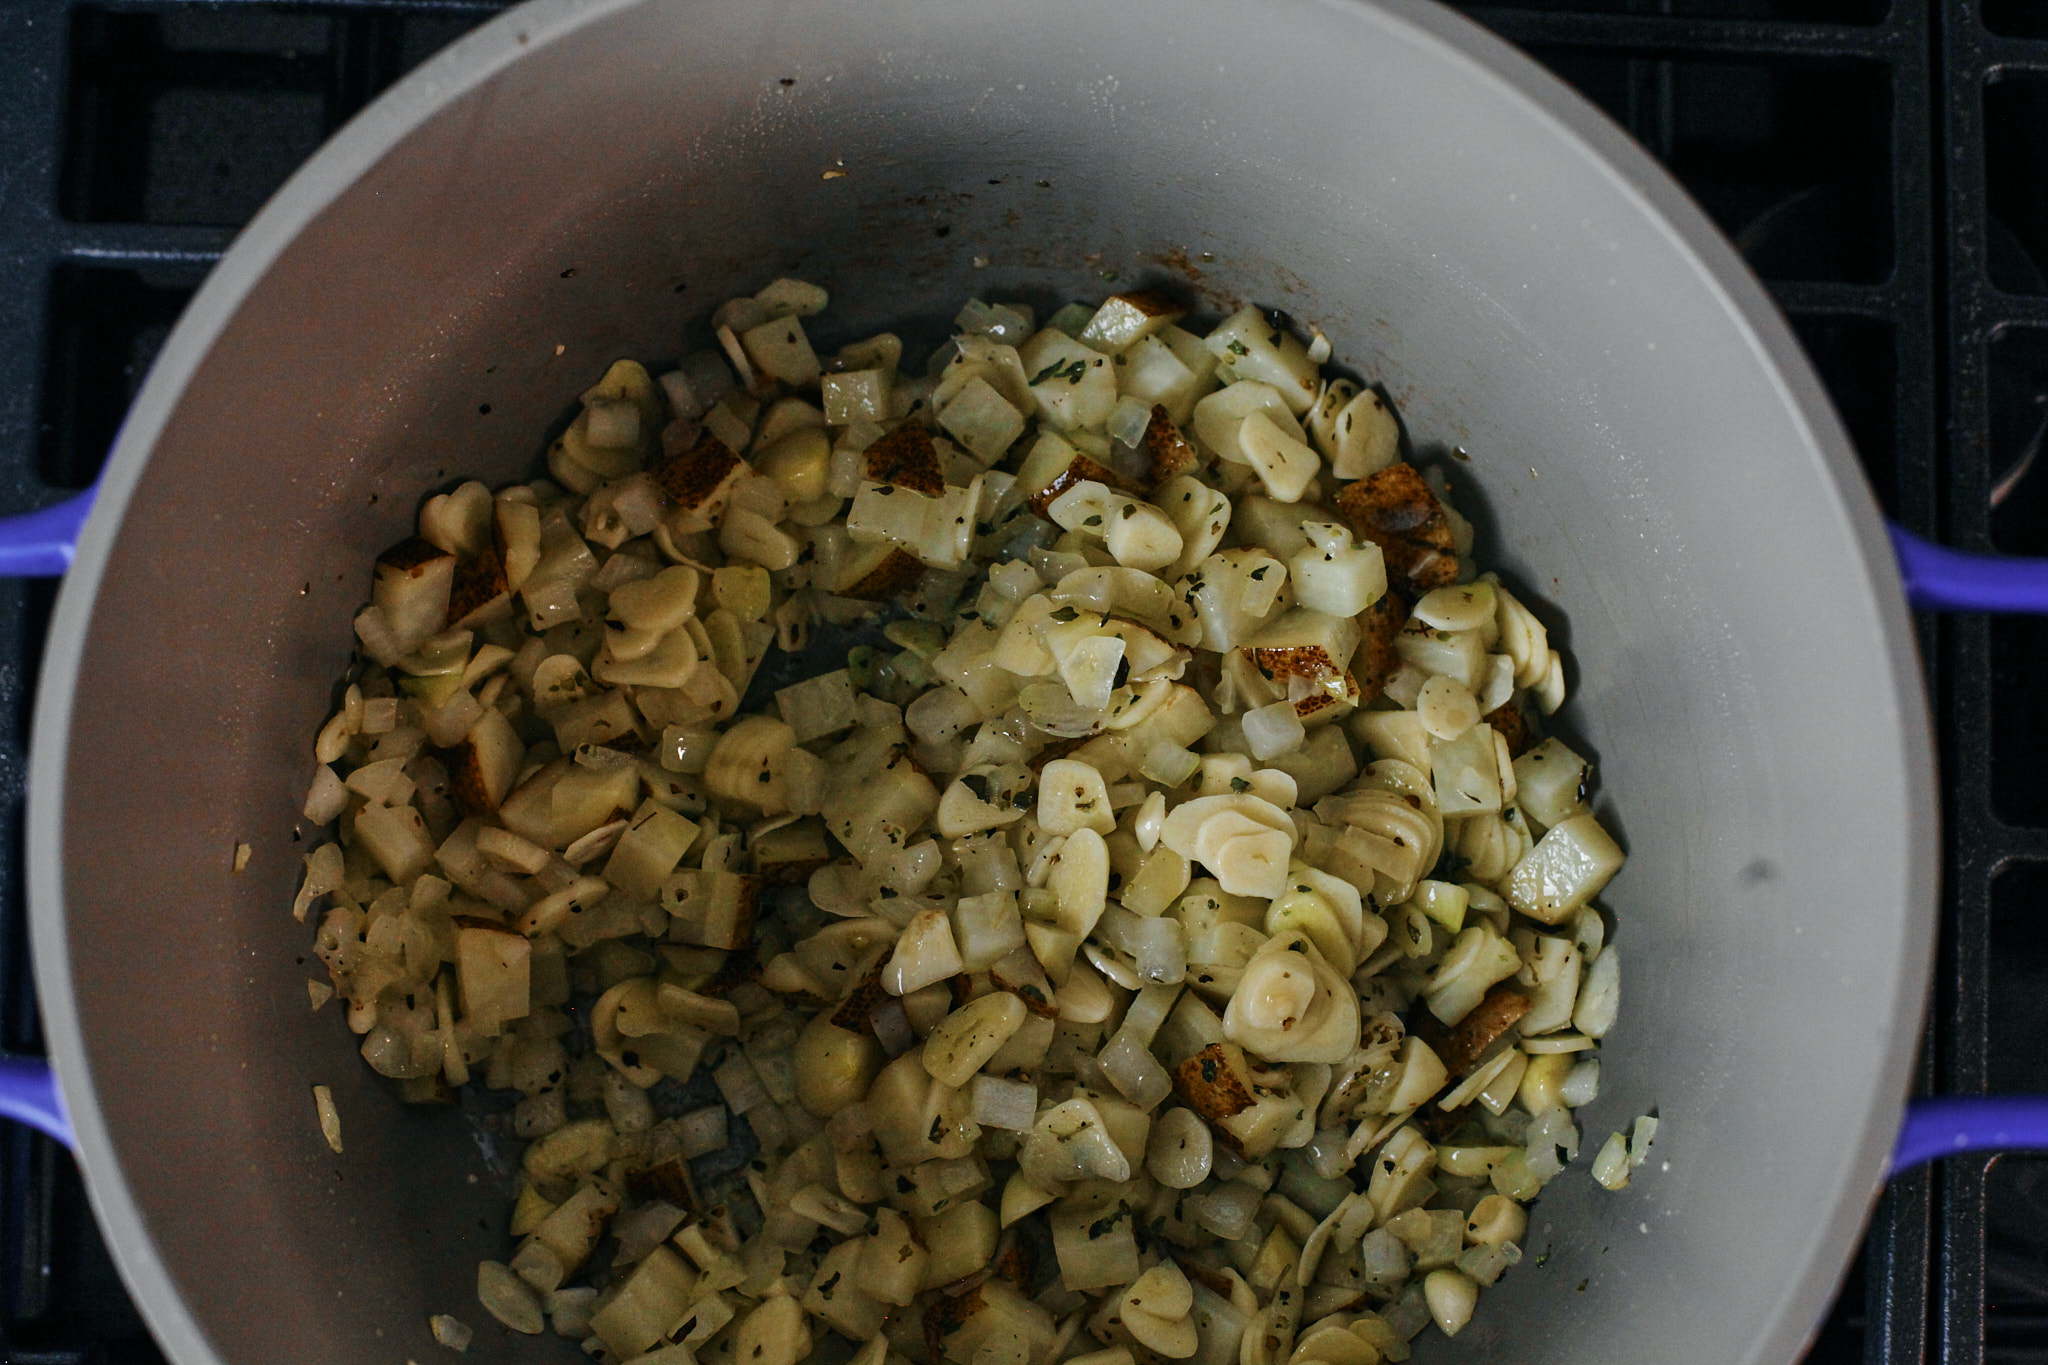 garlic, onion and seasonings sautéeing over the stove for the garlic soup